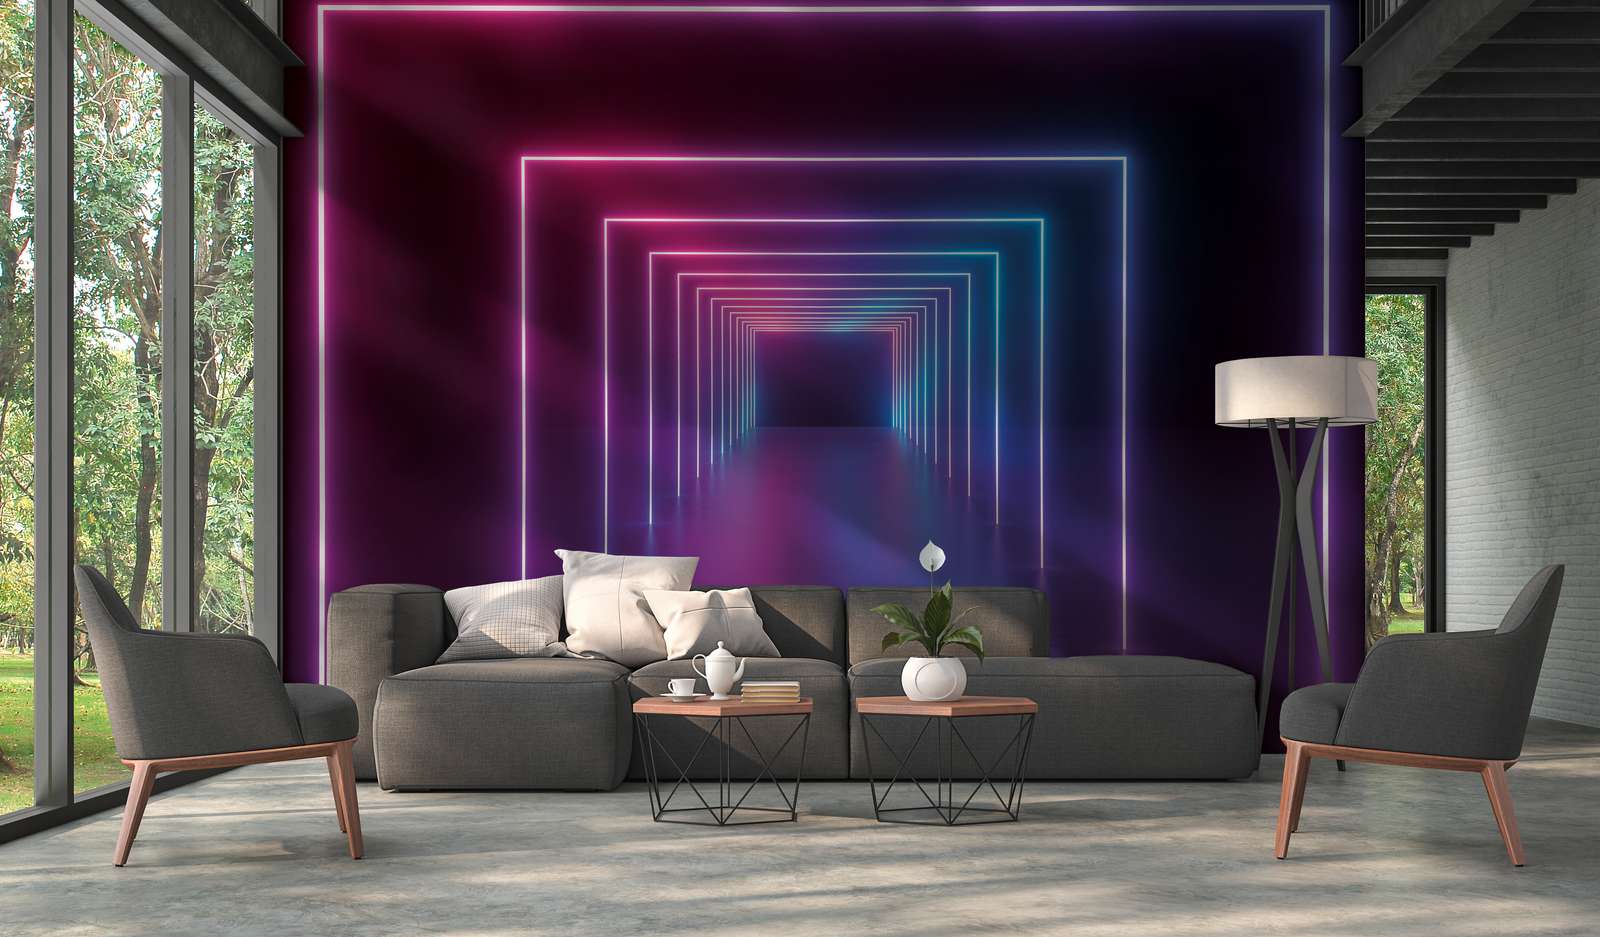             Fototapete Raum mit langem Gang LED Farben – Lila, Blau, Neon
        